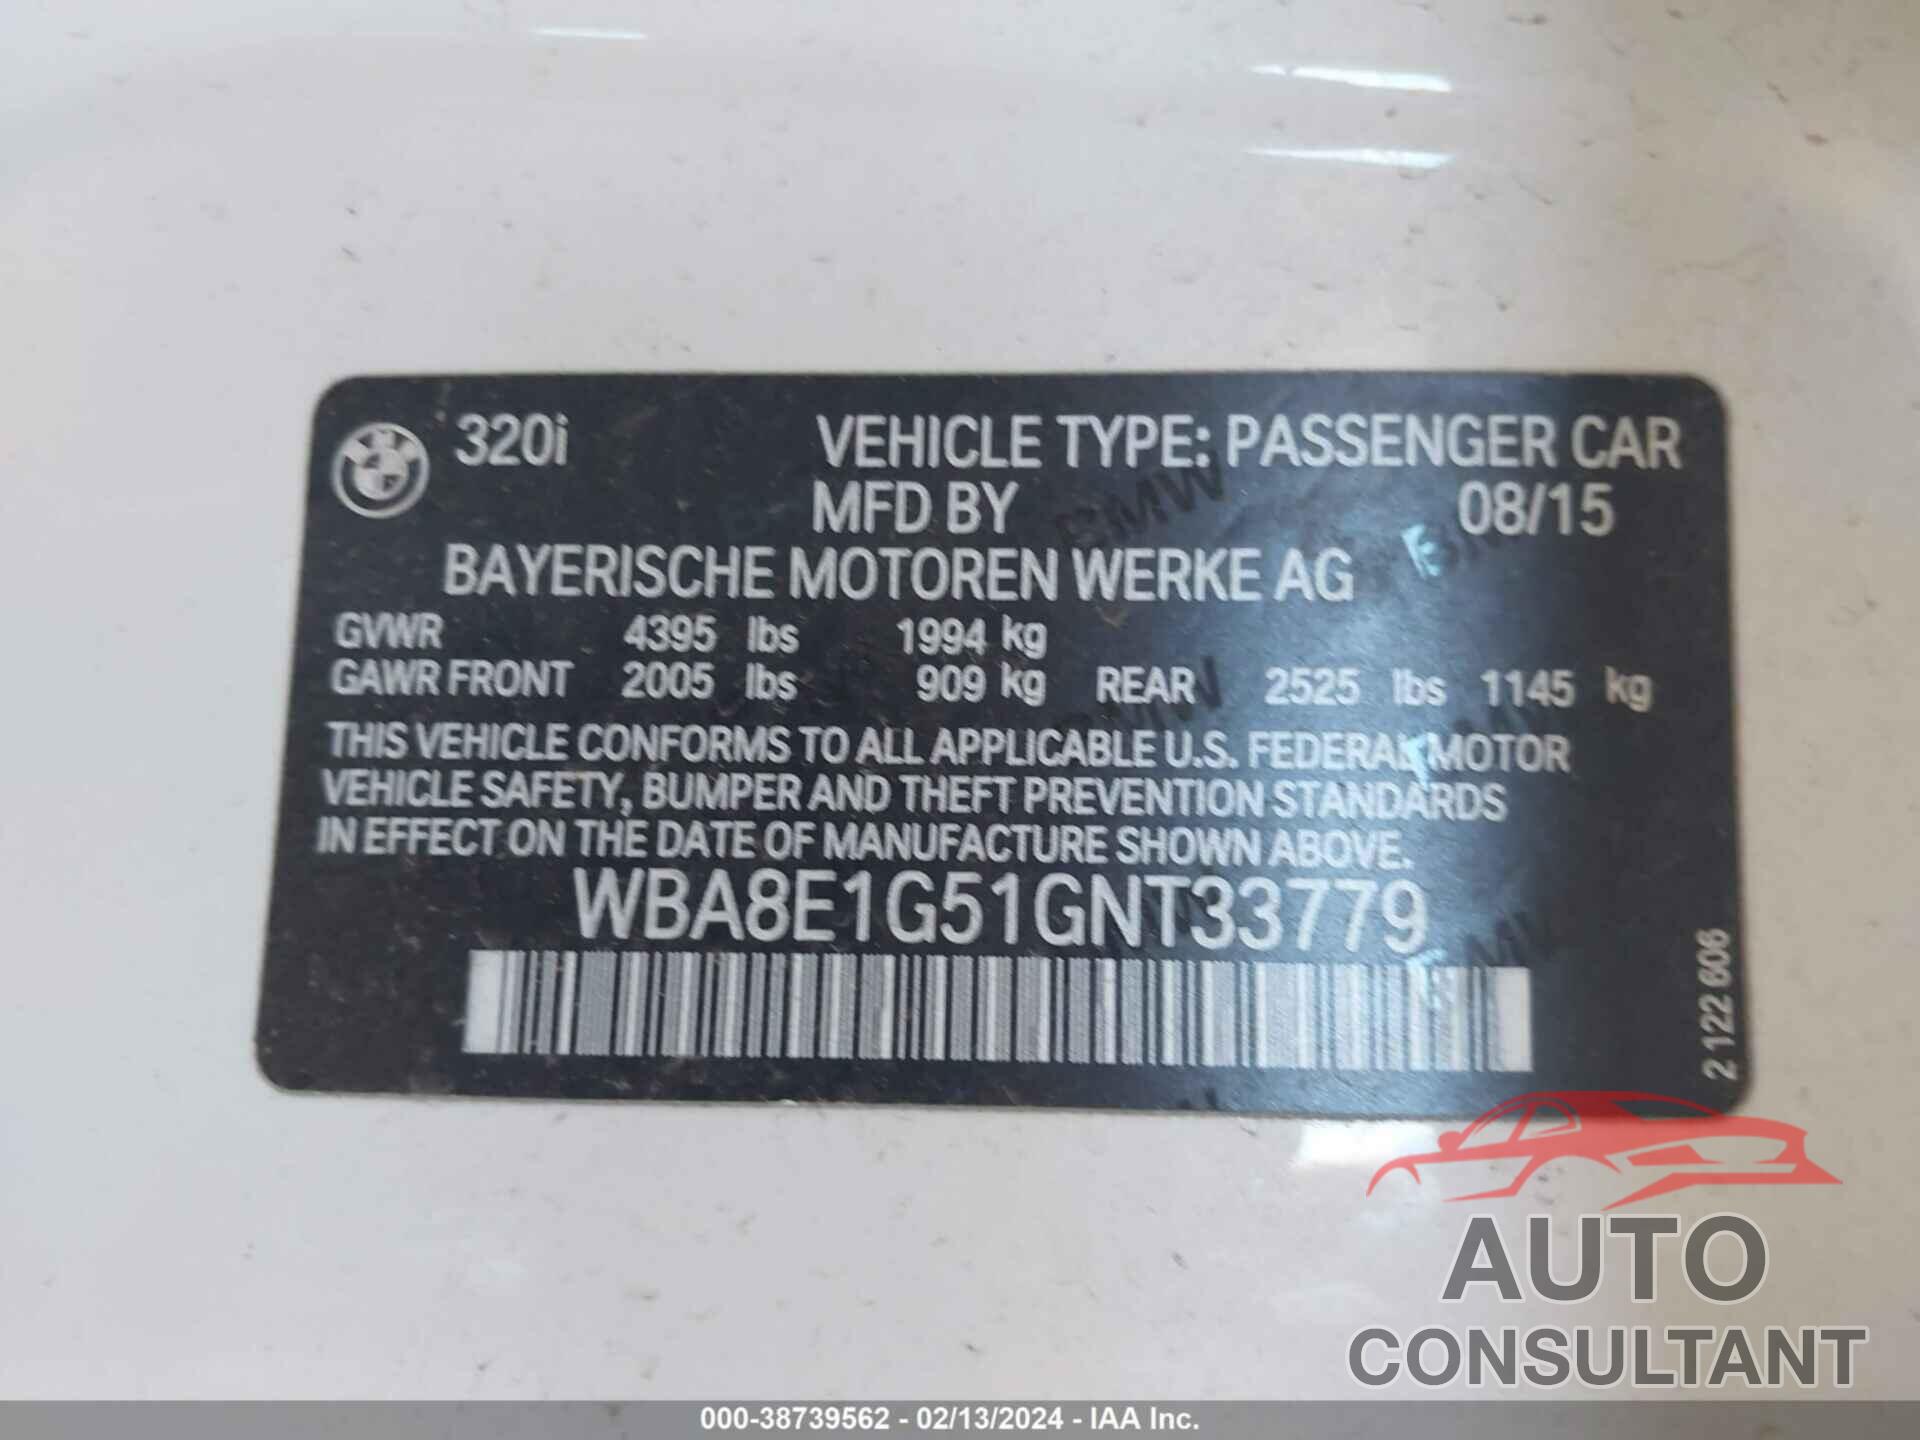 BMW 320I 2016 - WBA8E1G51GNT33779